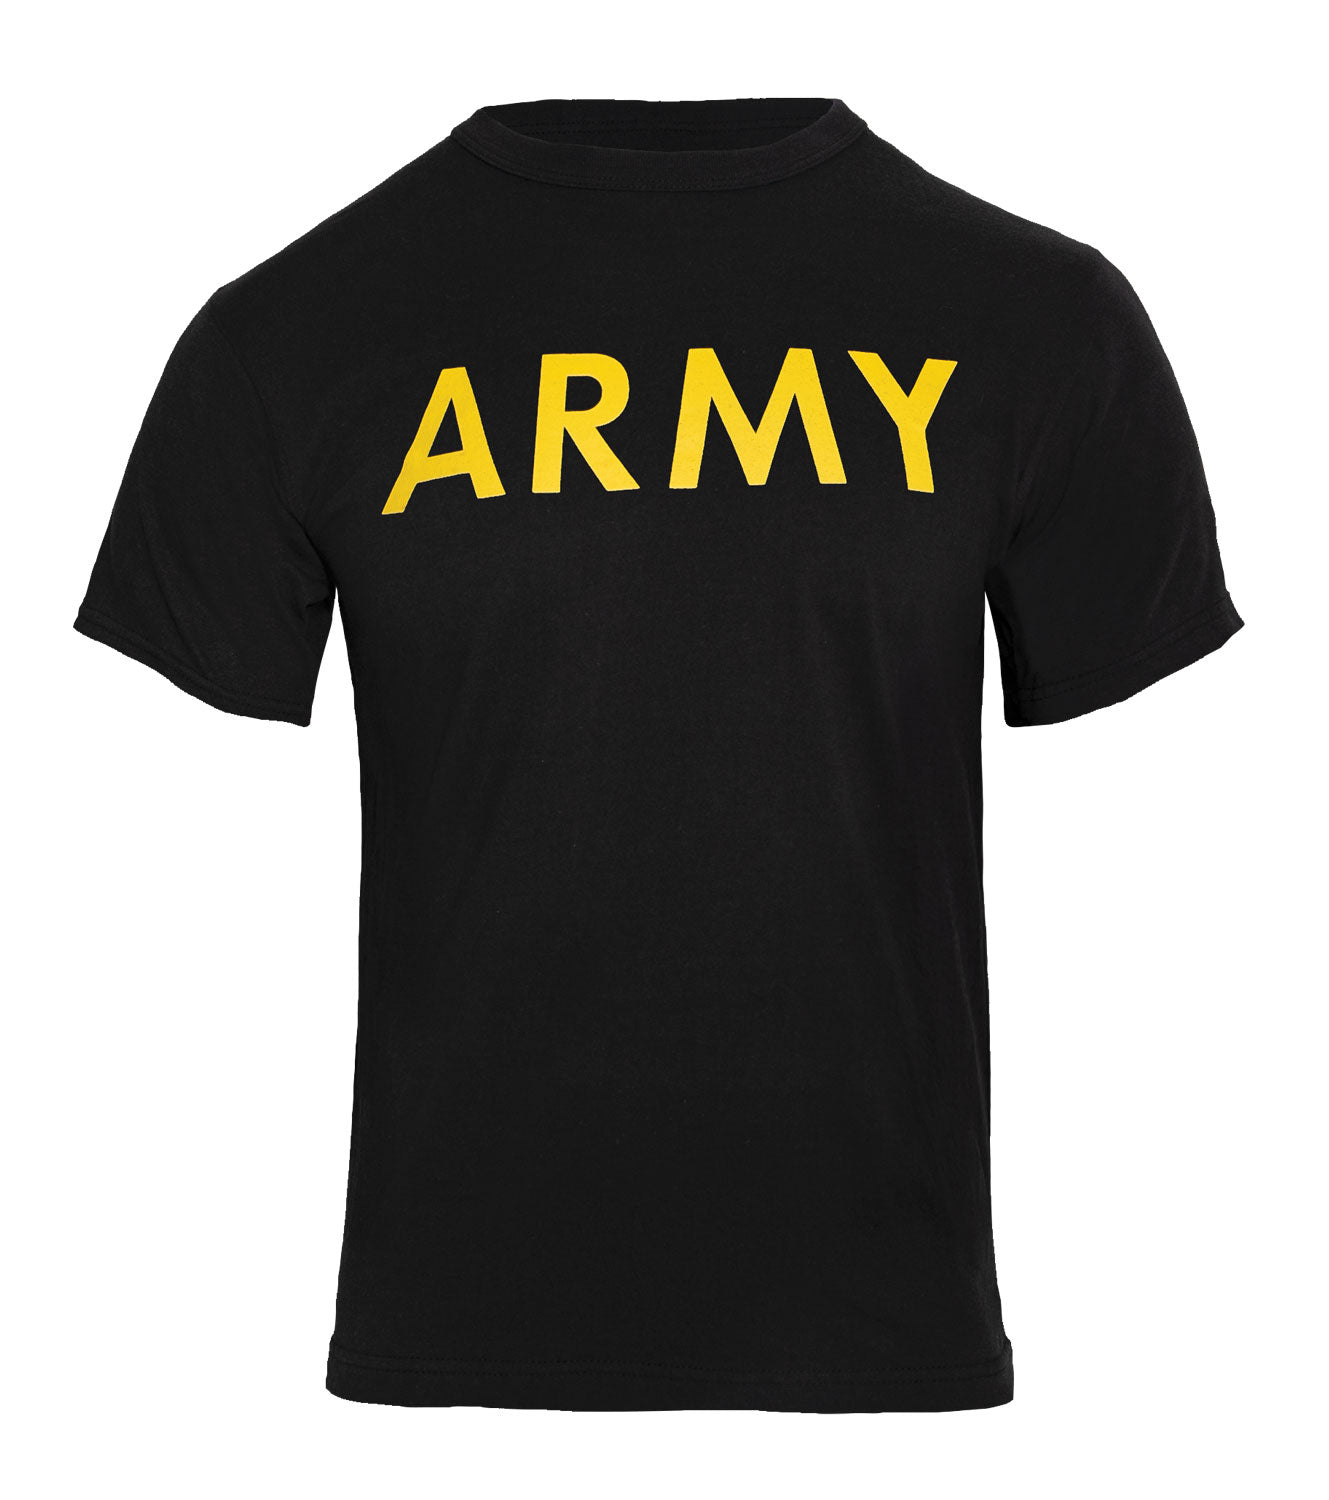 Milspec Army T-Shirt T-Shirts MilTac Tactical Military Outdoor Gear Australia